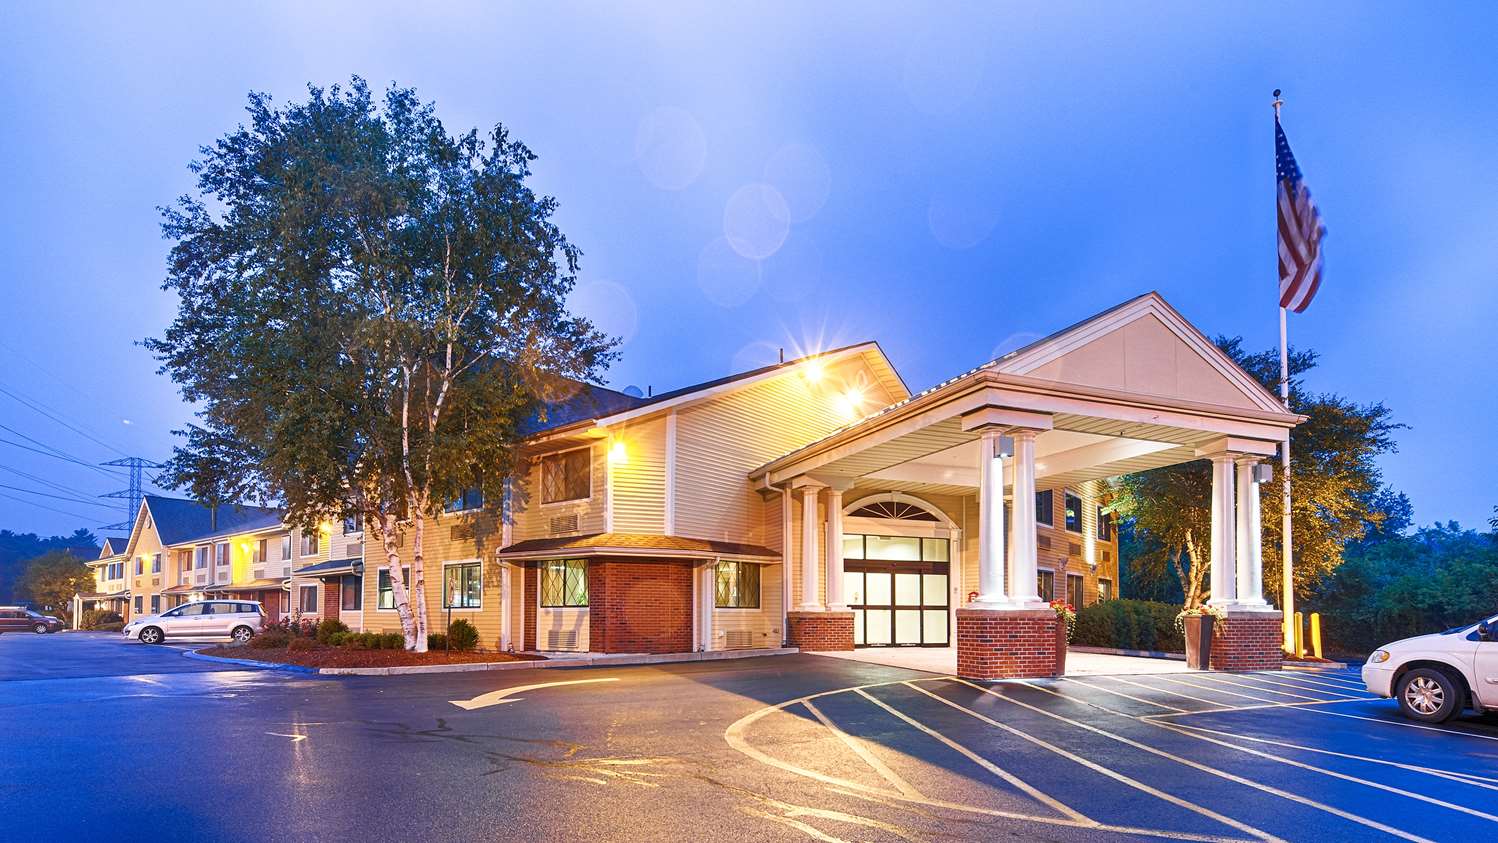 Massachusetts Hotels Motels Inns, MA Hotels Motels Inns, Hotels Motels Inns In Massachusetts, Hotels Motels Inns In MA